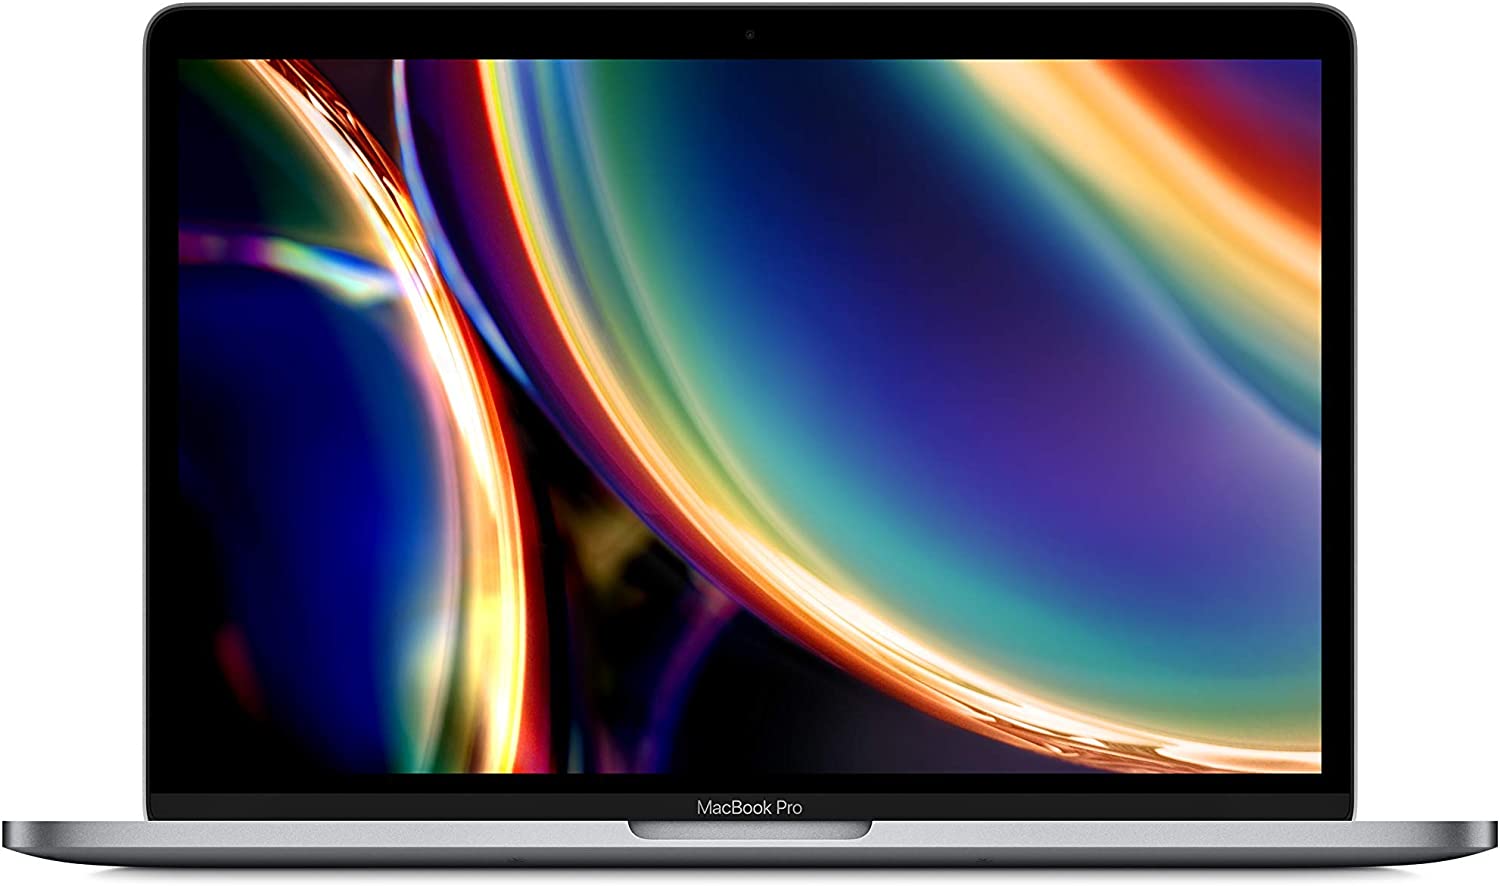 Apple MacBook Pro 13-inch 2020 (8GB RAM, Intel Core i5, 256GB SSD) - Space Gray (Certified Refurbished)